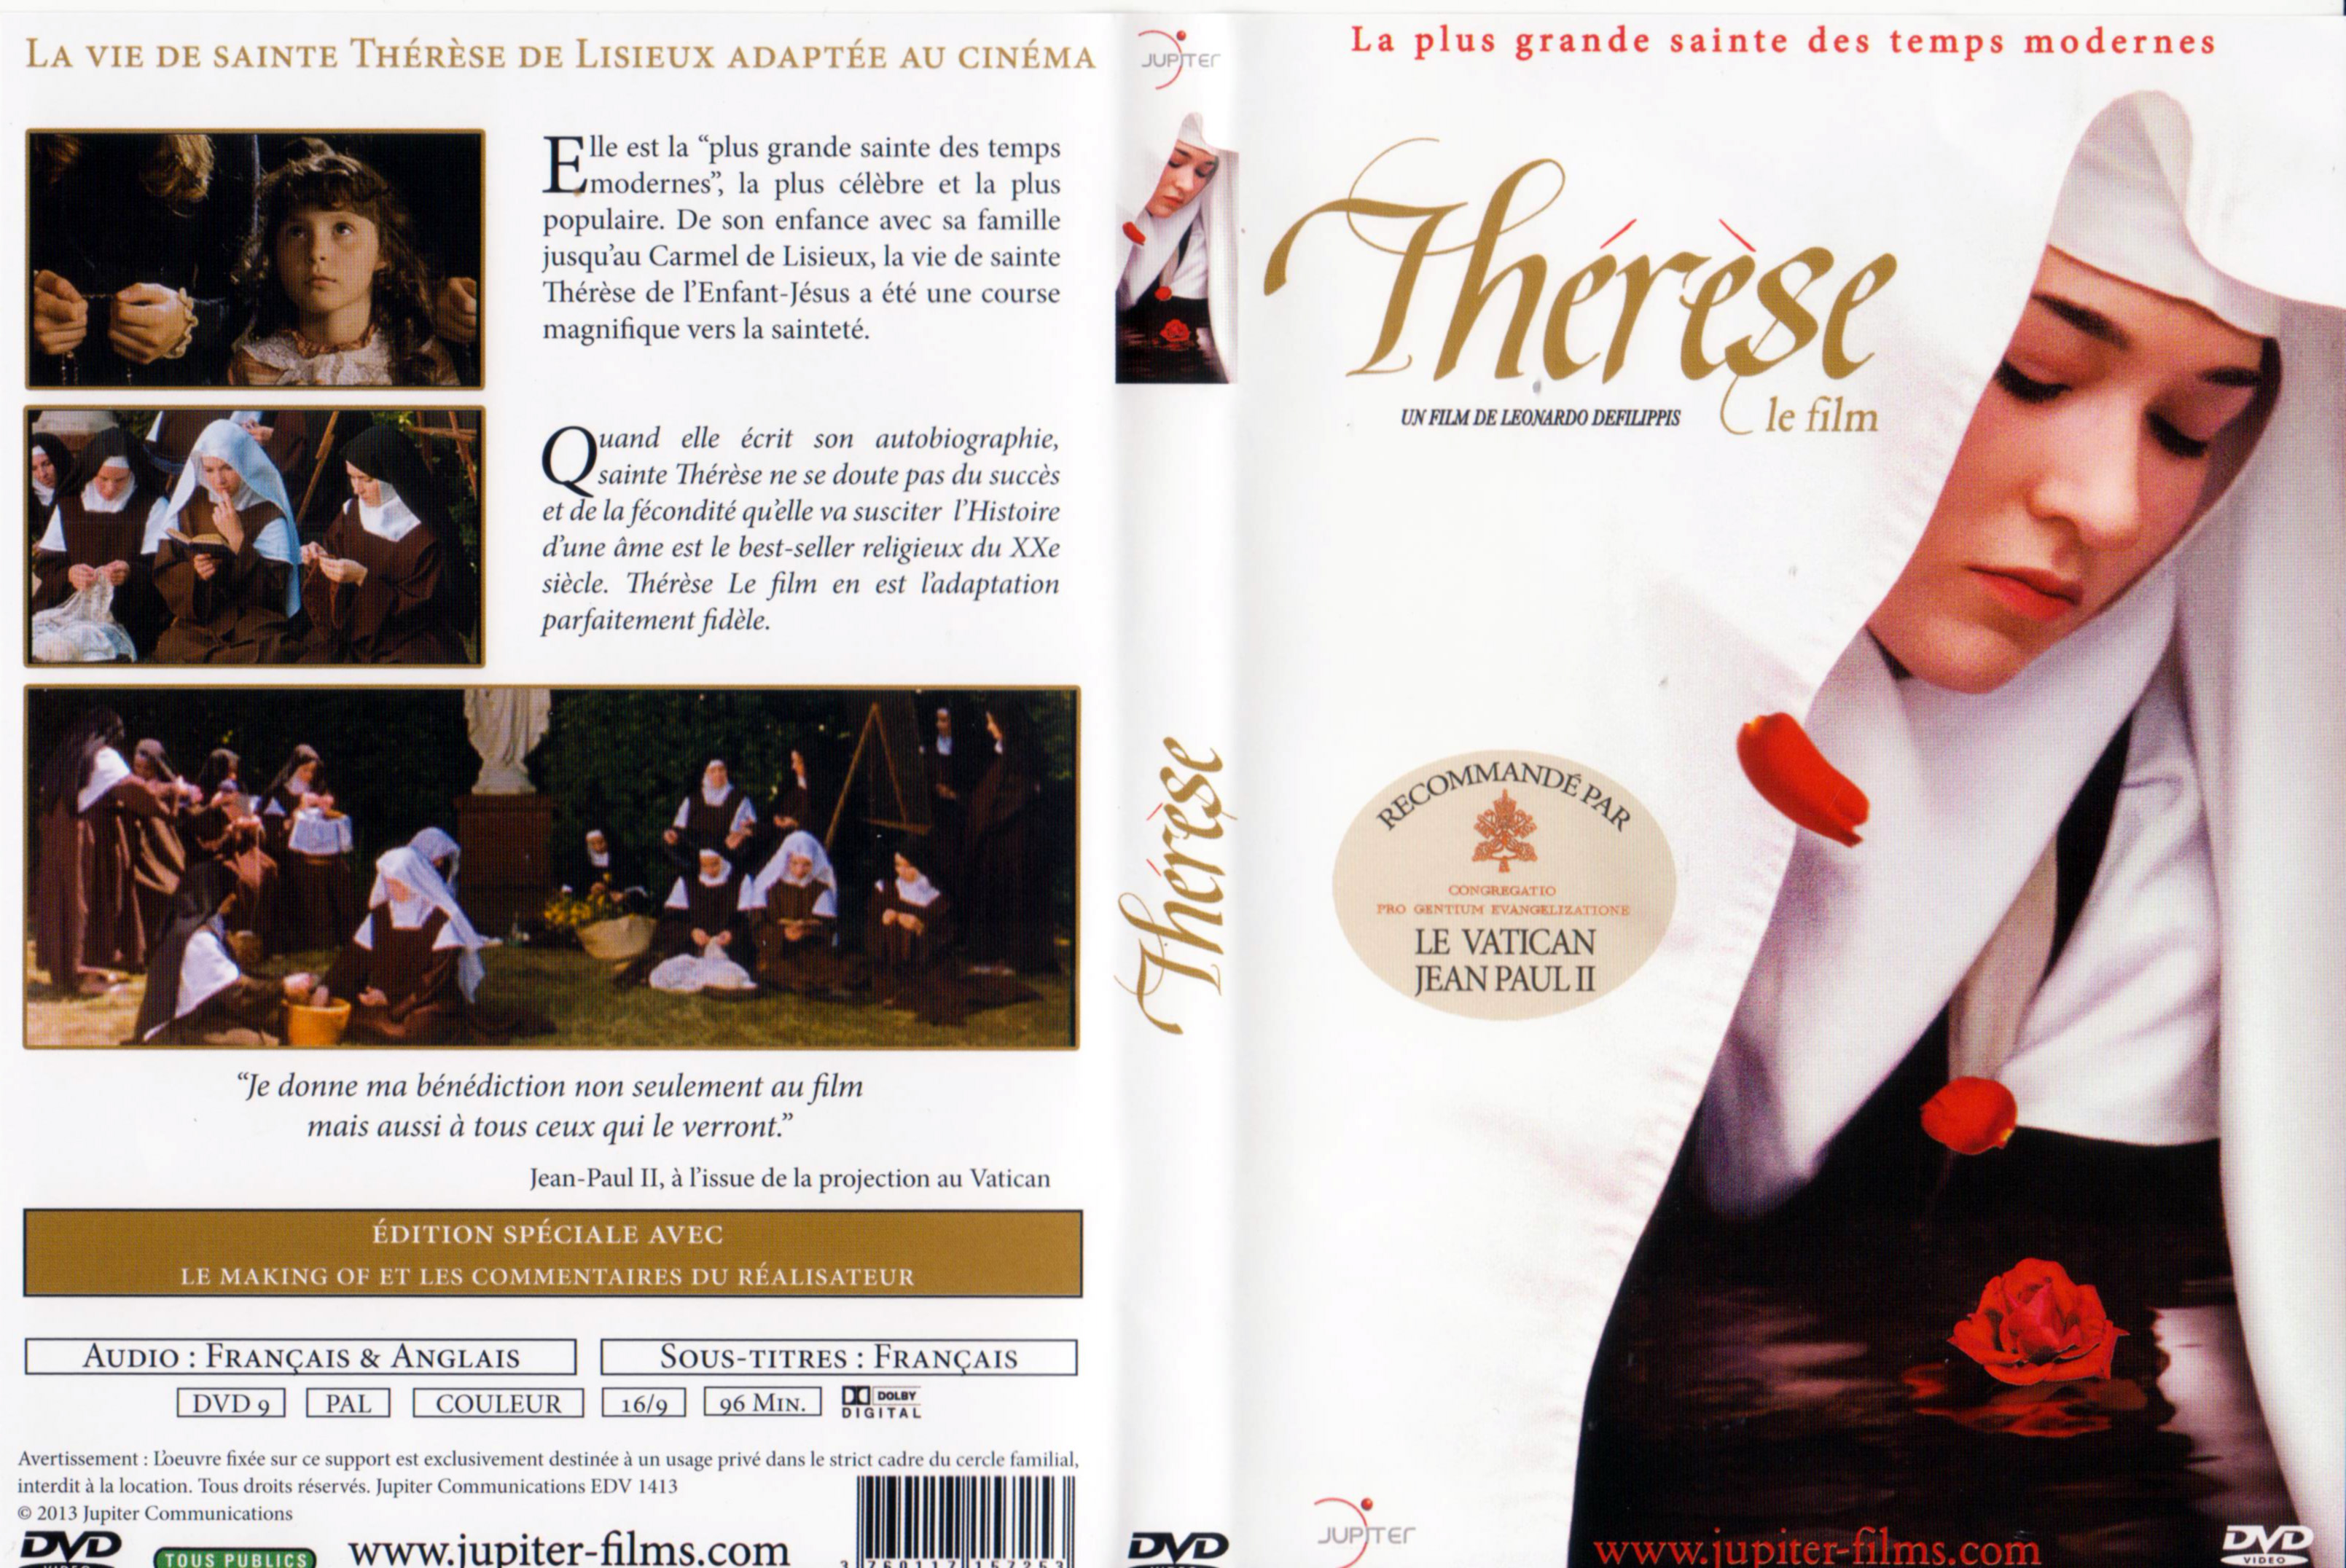 Jaquette DVD Thrse